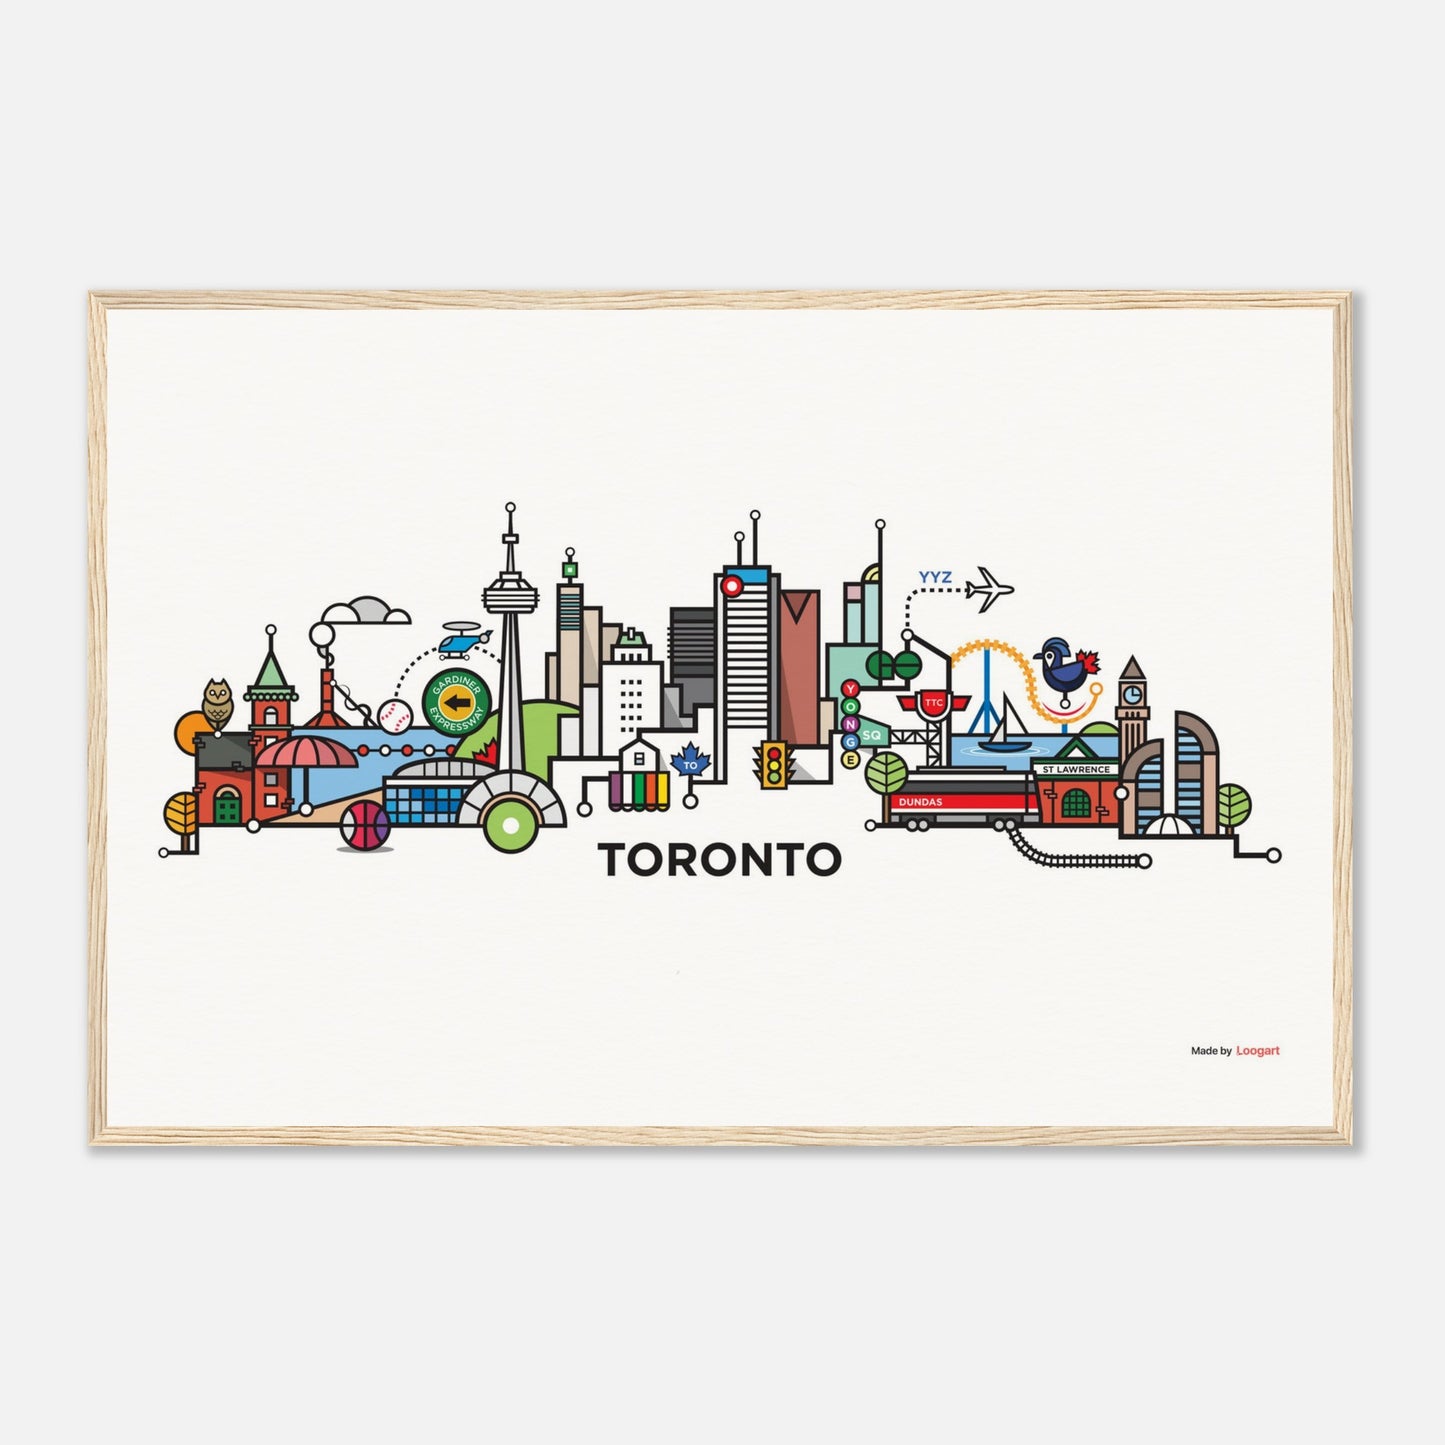 Toronto CityLine by Loogart